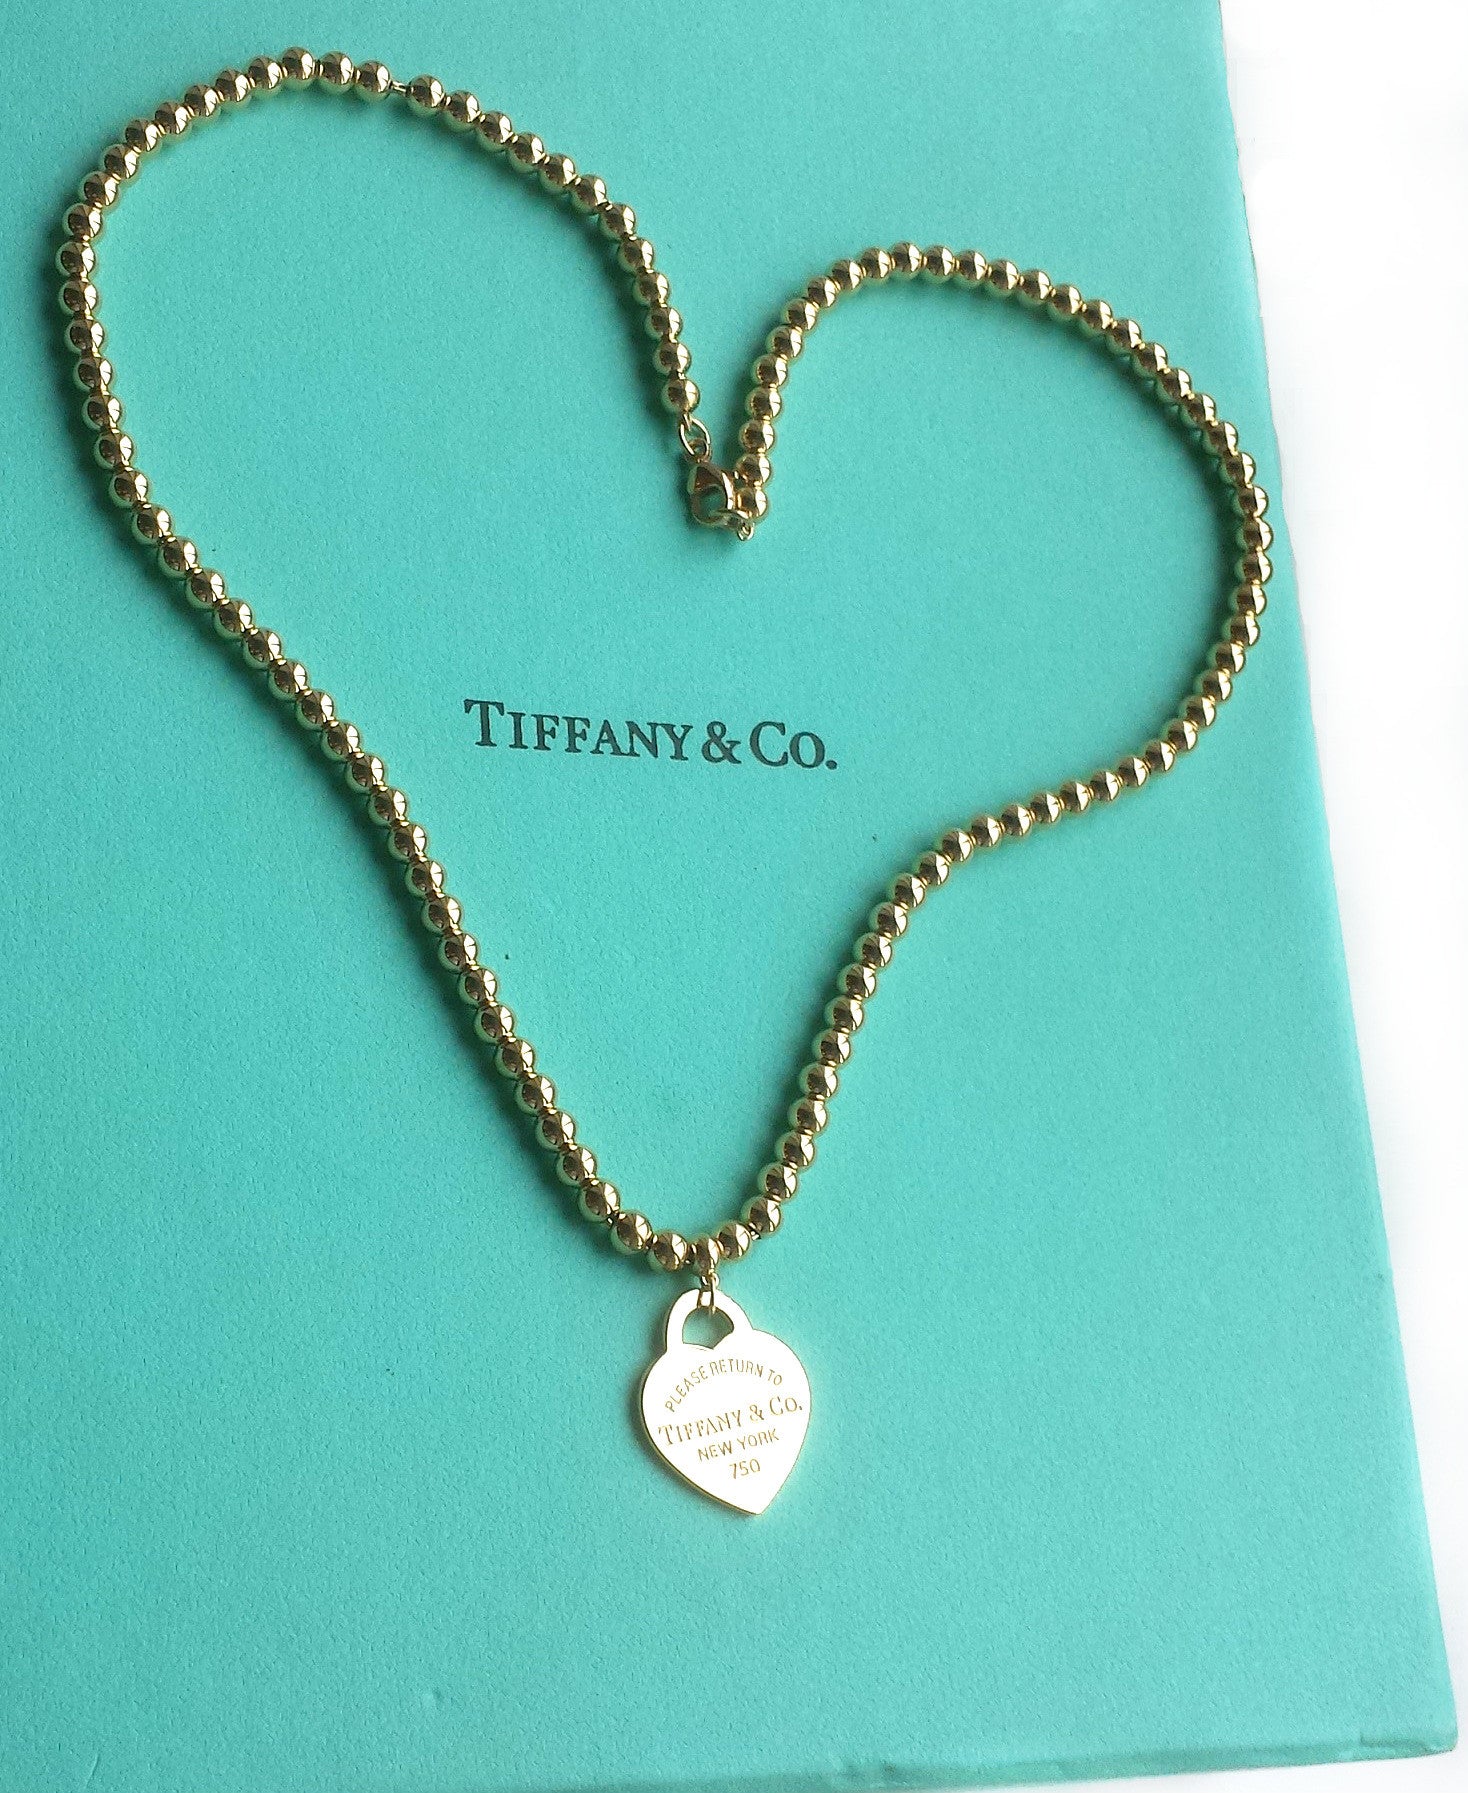 tiffany beaded necklace with heart